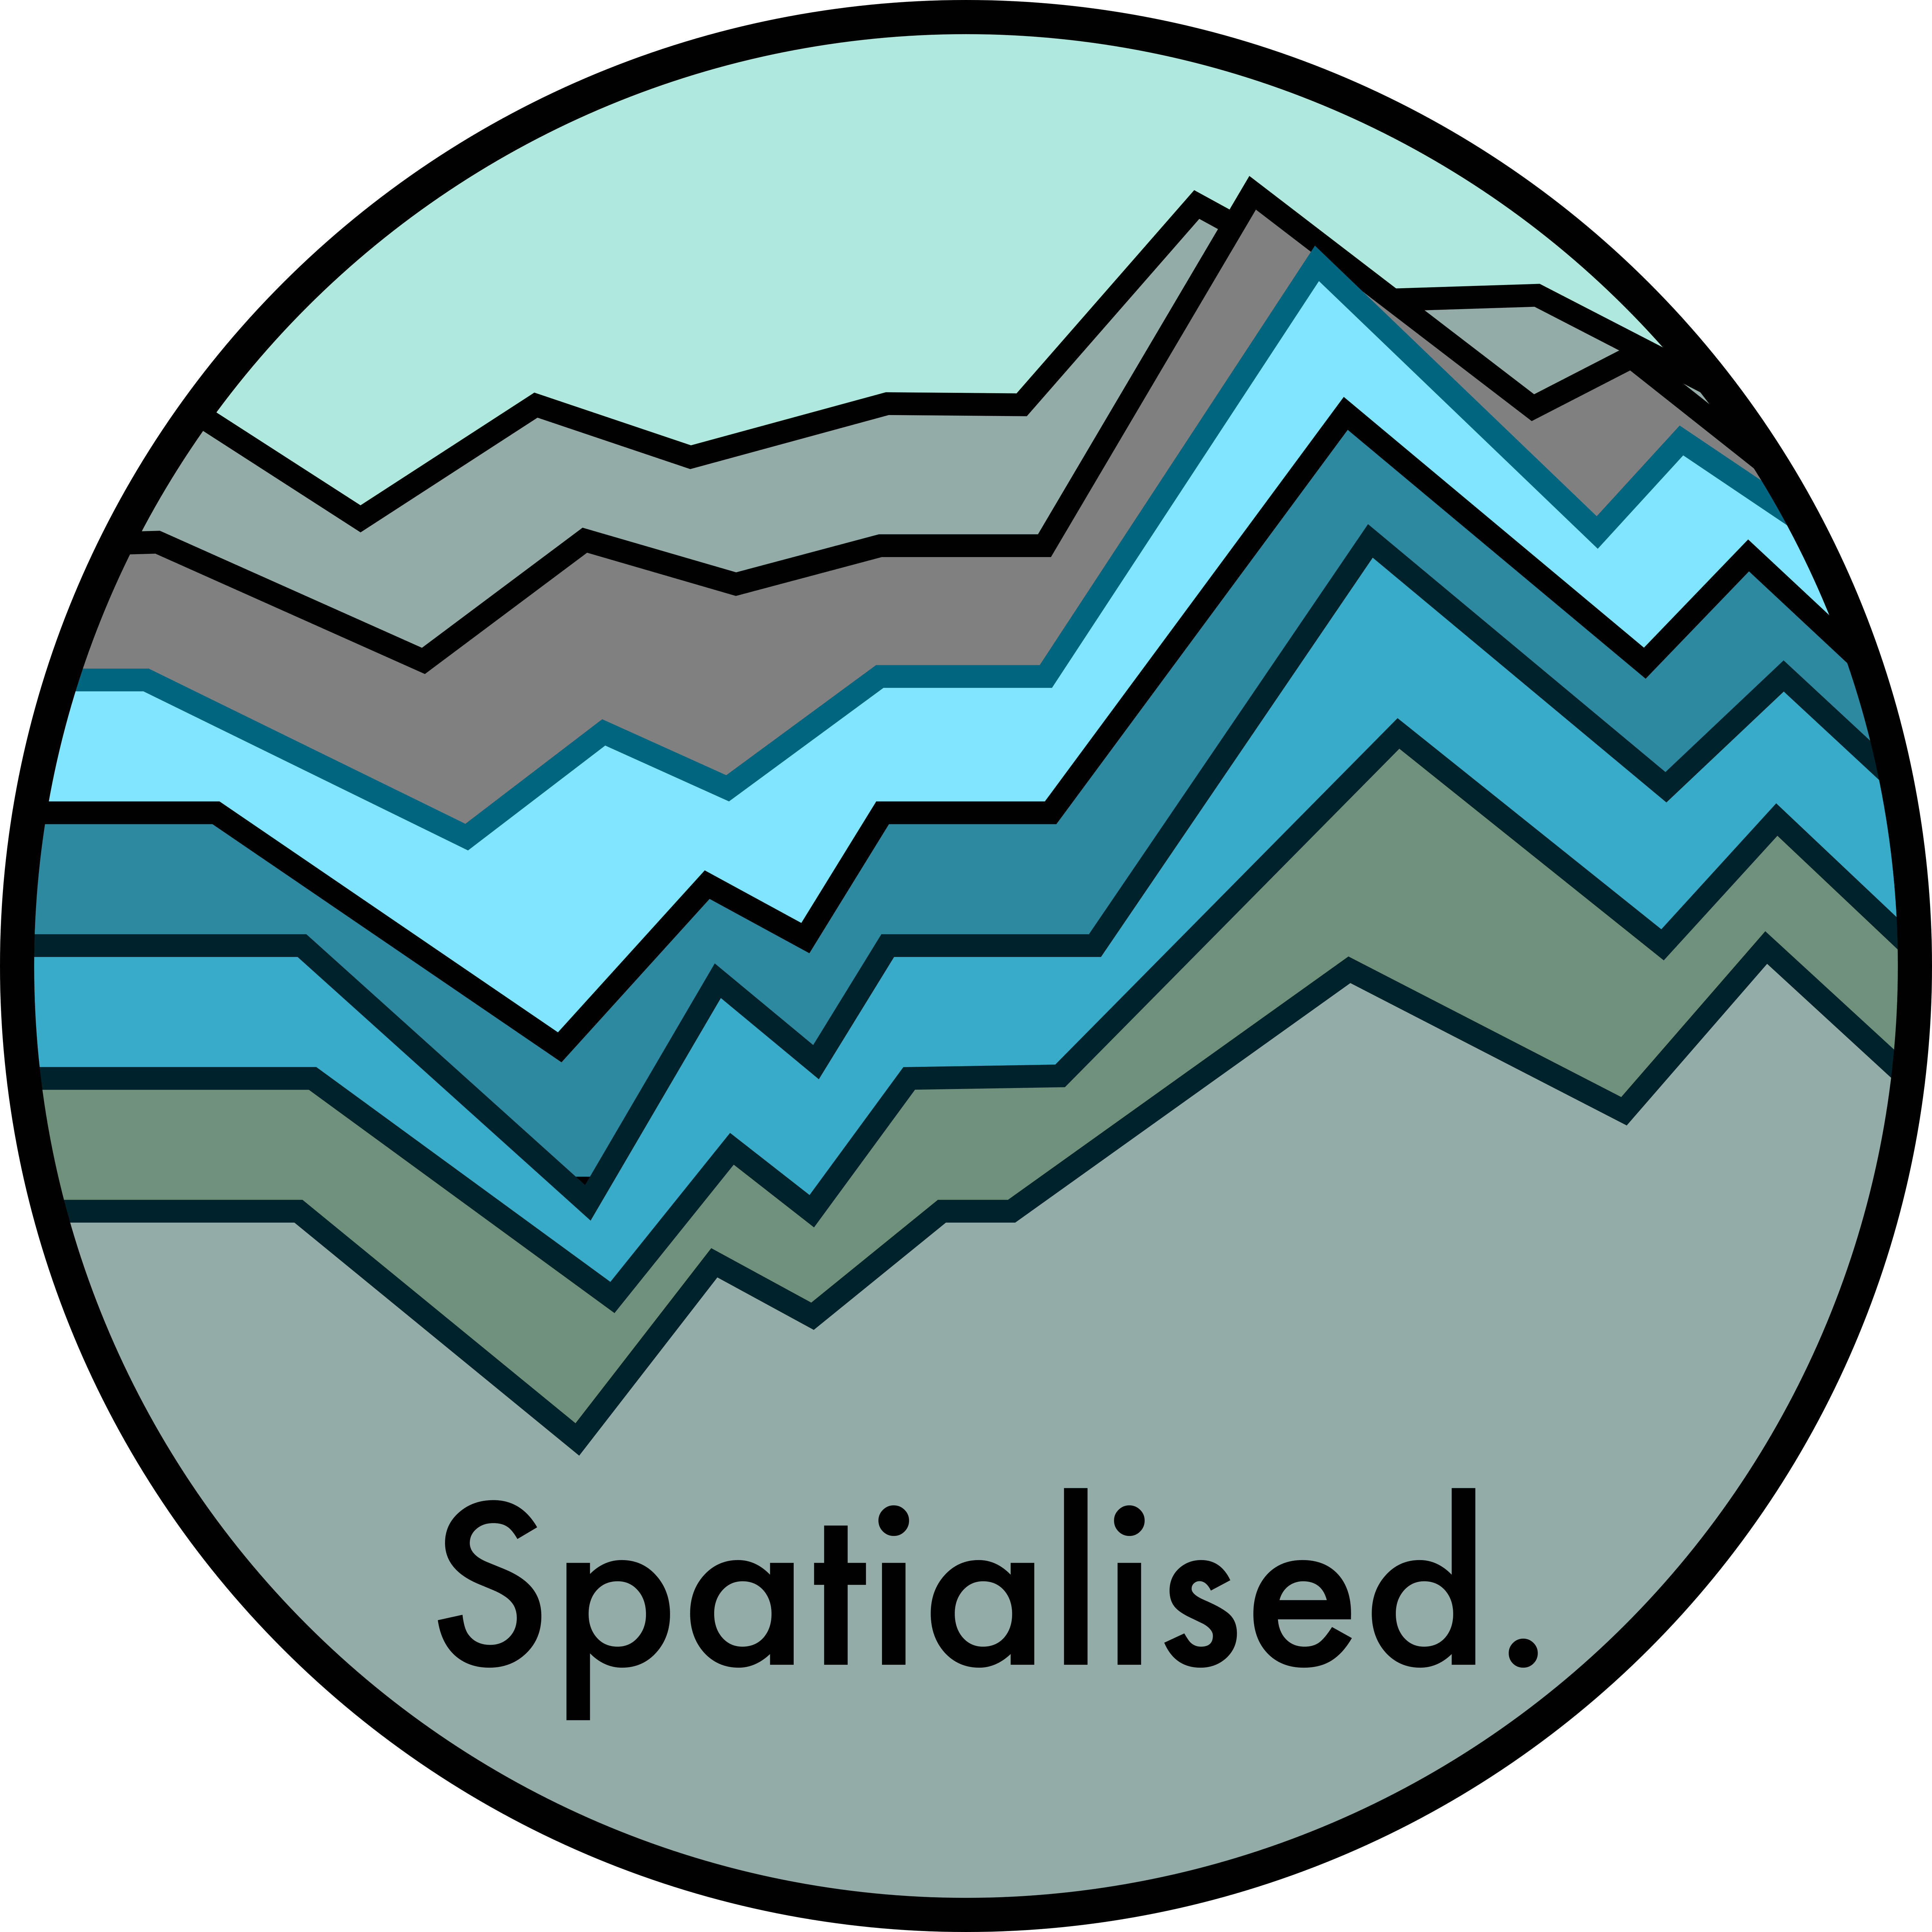 Spatialised logo